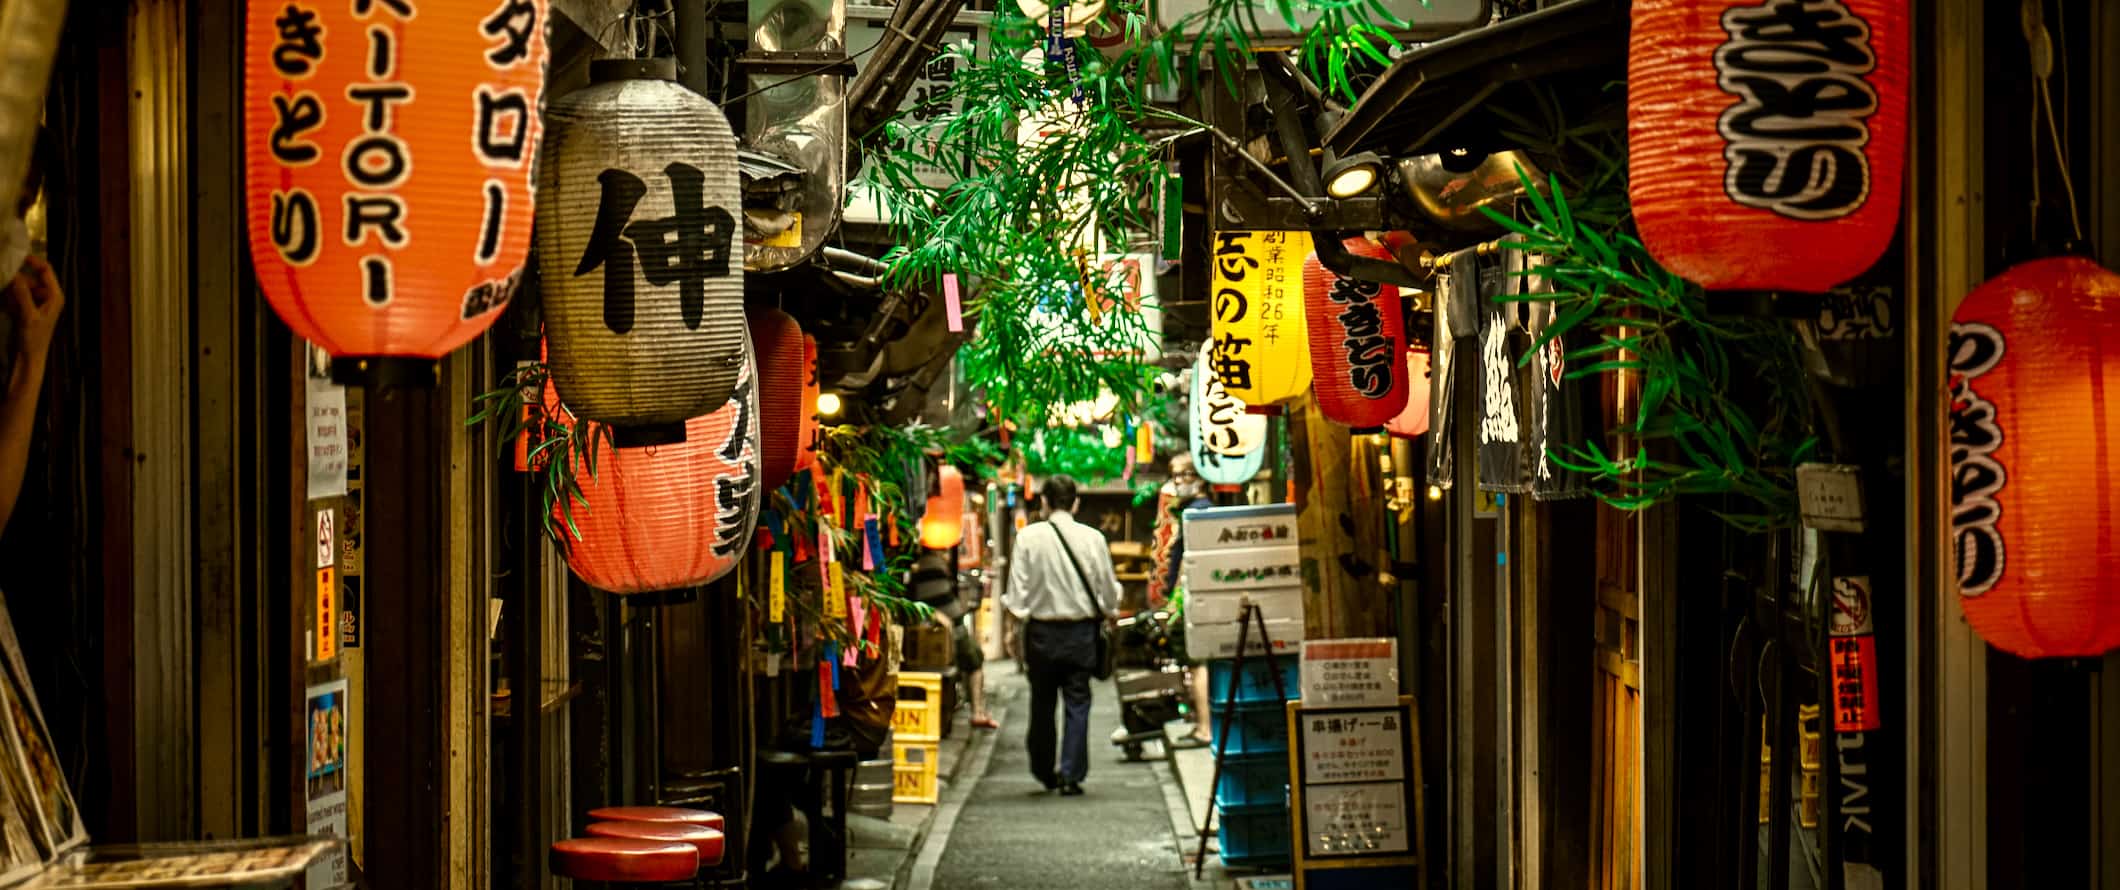 A man walking down a narrow alleyway lined by shops in Tokyo, Japan